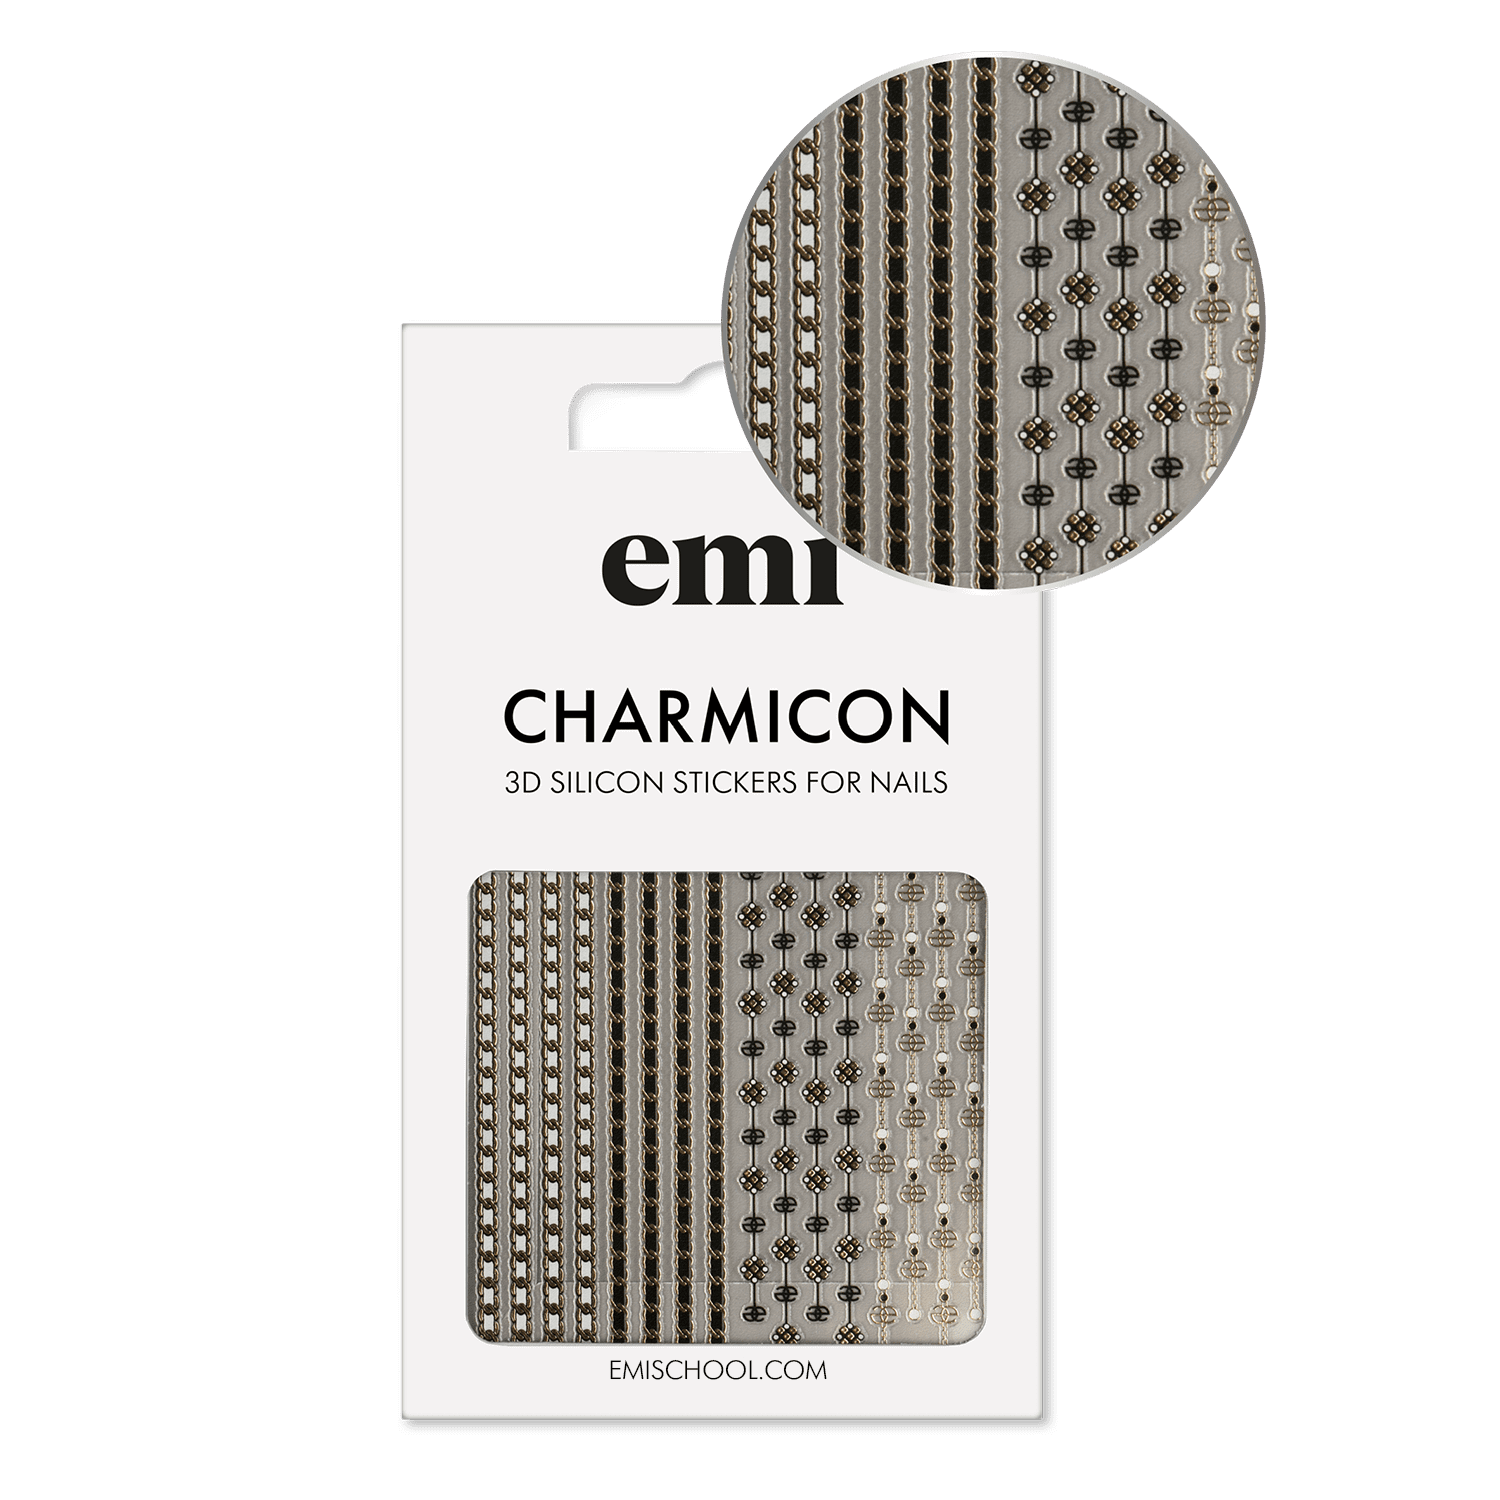 Charmicon 3D Silicone Stickers #236 Fashion chains